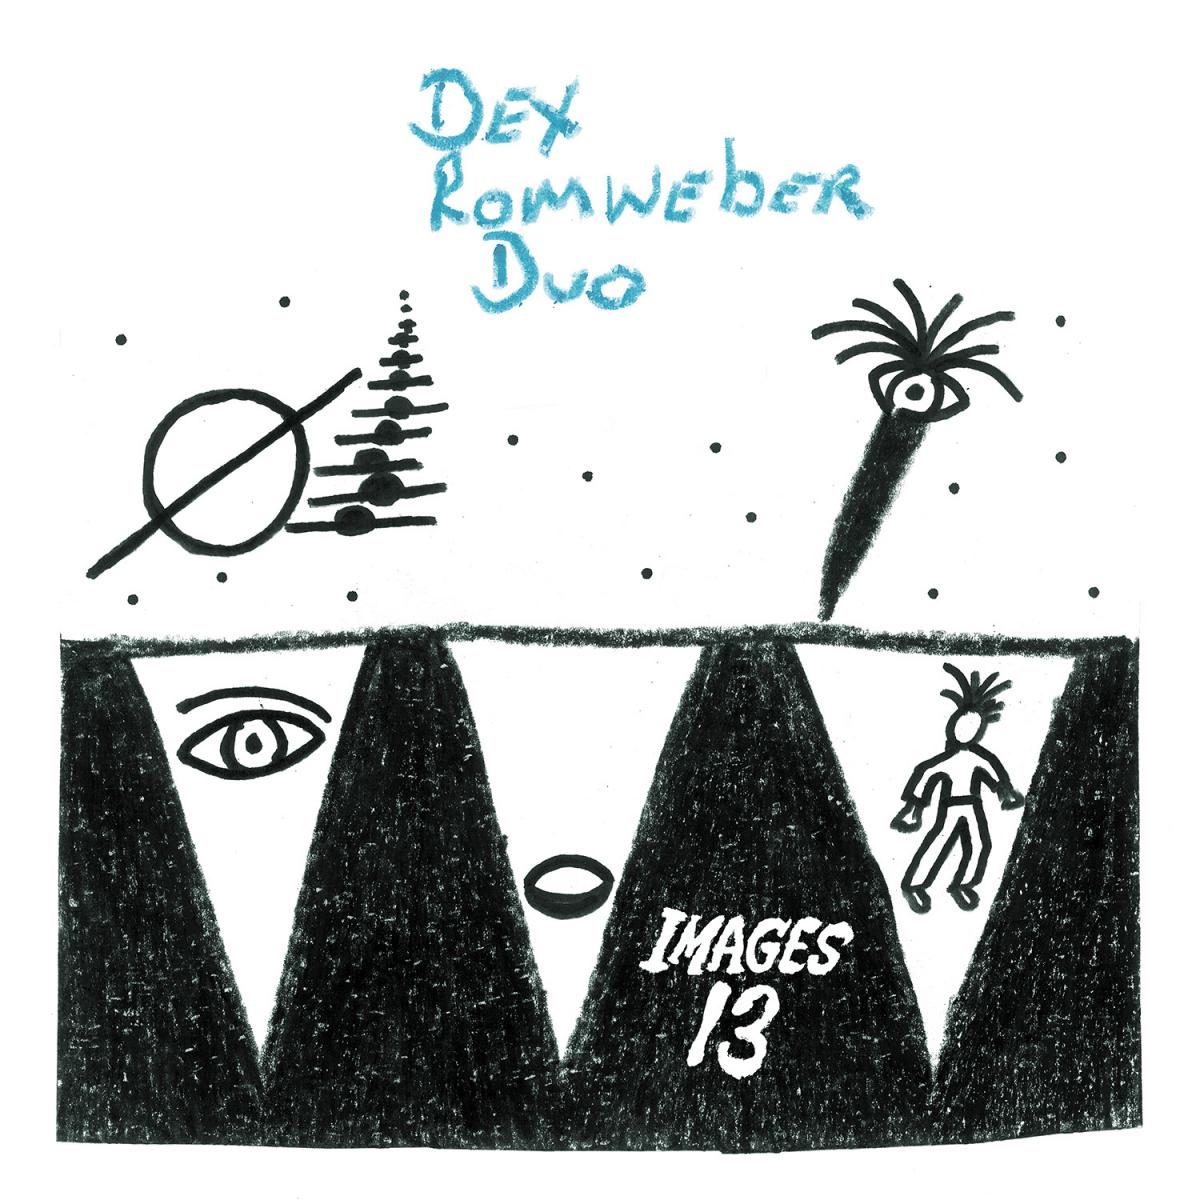 Dex Romweber Duo-Images 13 - Cameron Records